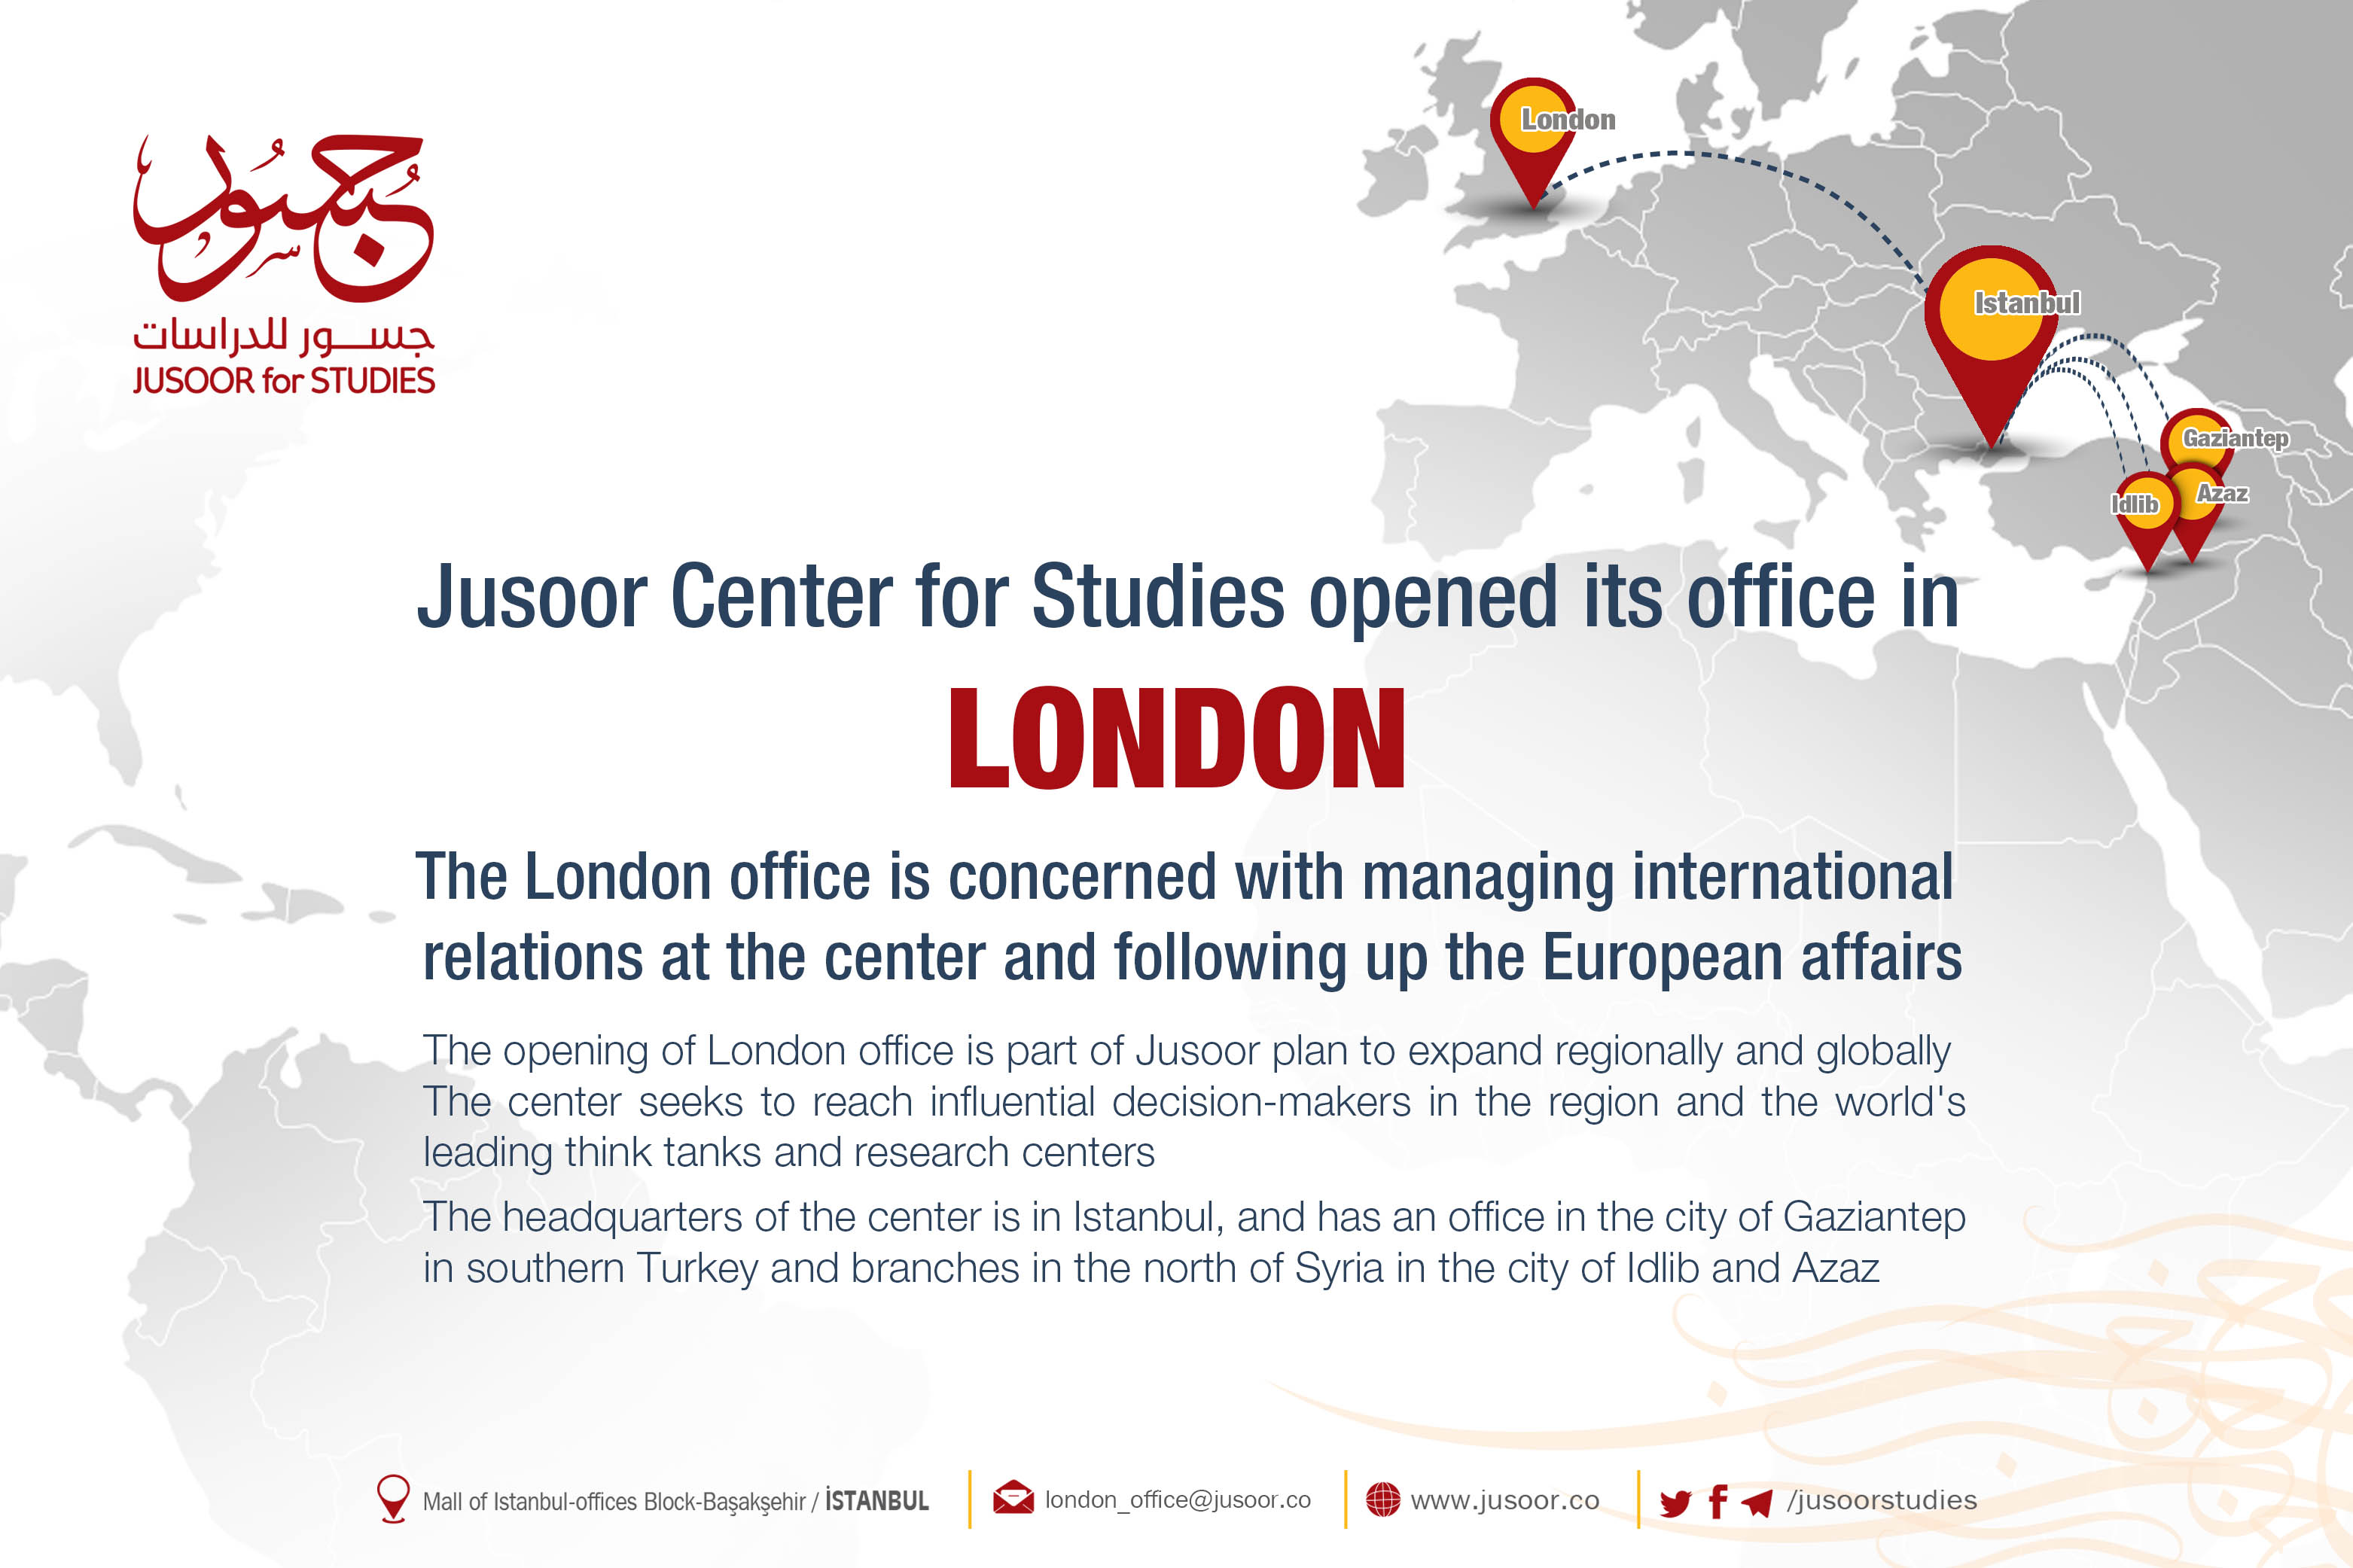 OPENING JUSOOR FOR STUDIES CENTER IN London